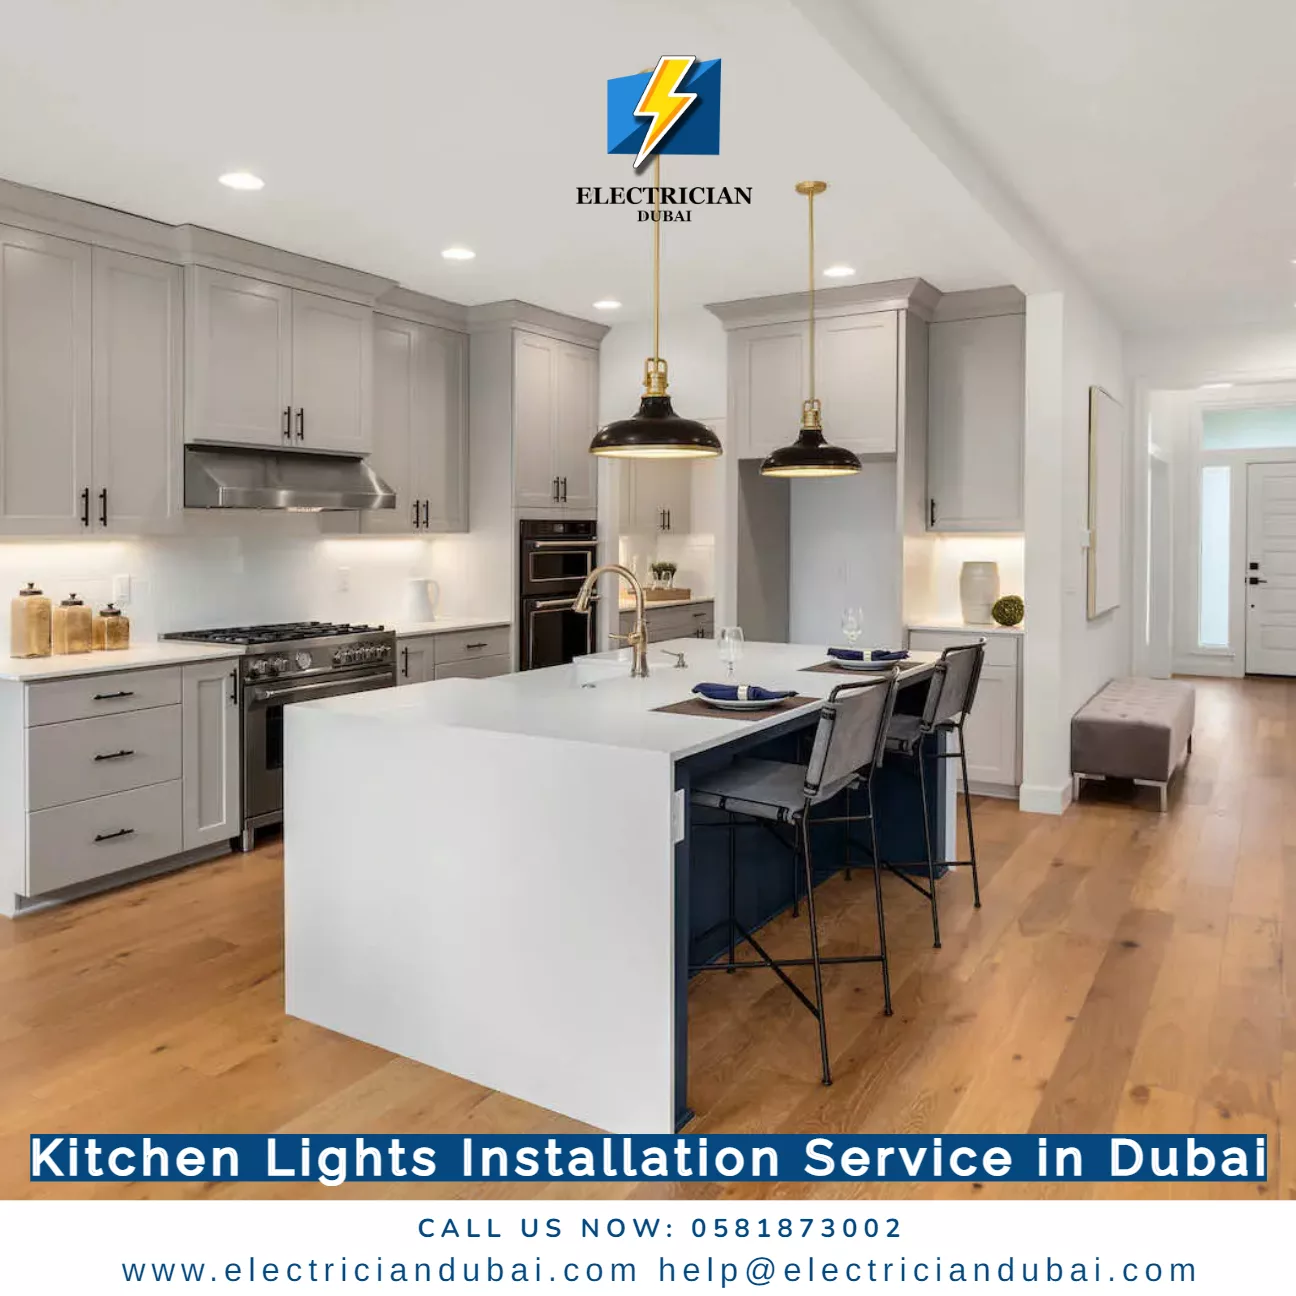 Kitchen Lights Installation Service in Dubai